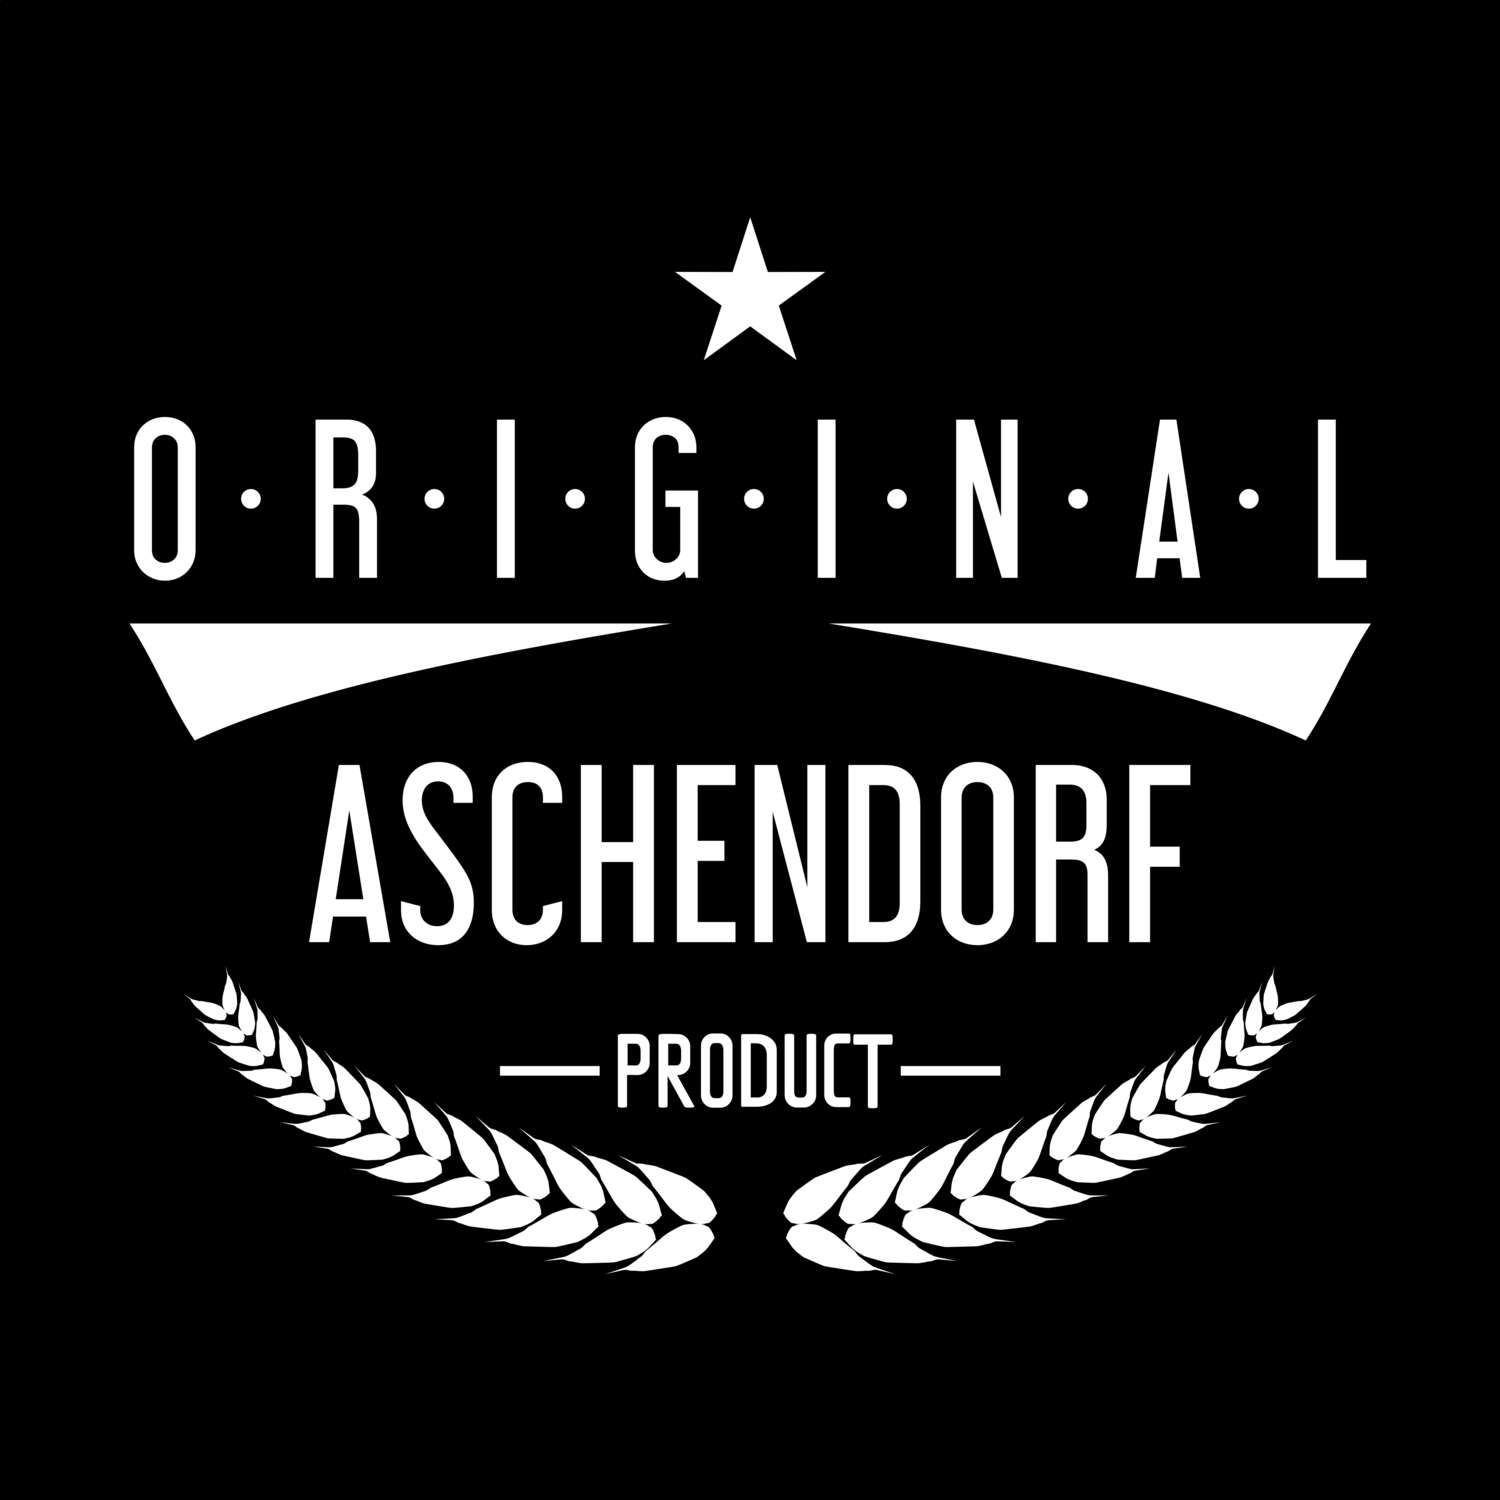 Aschendorf T-Shirt »Original Product«